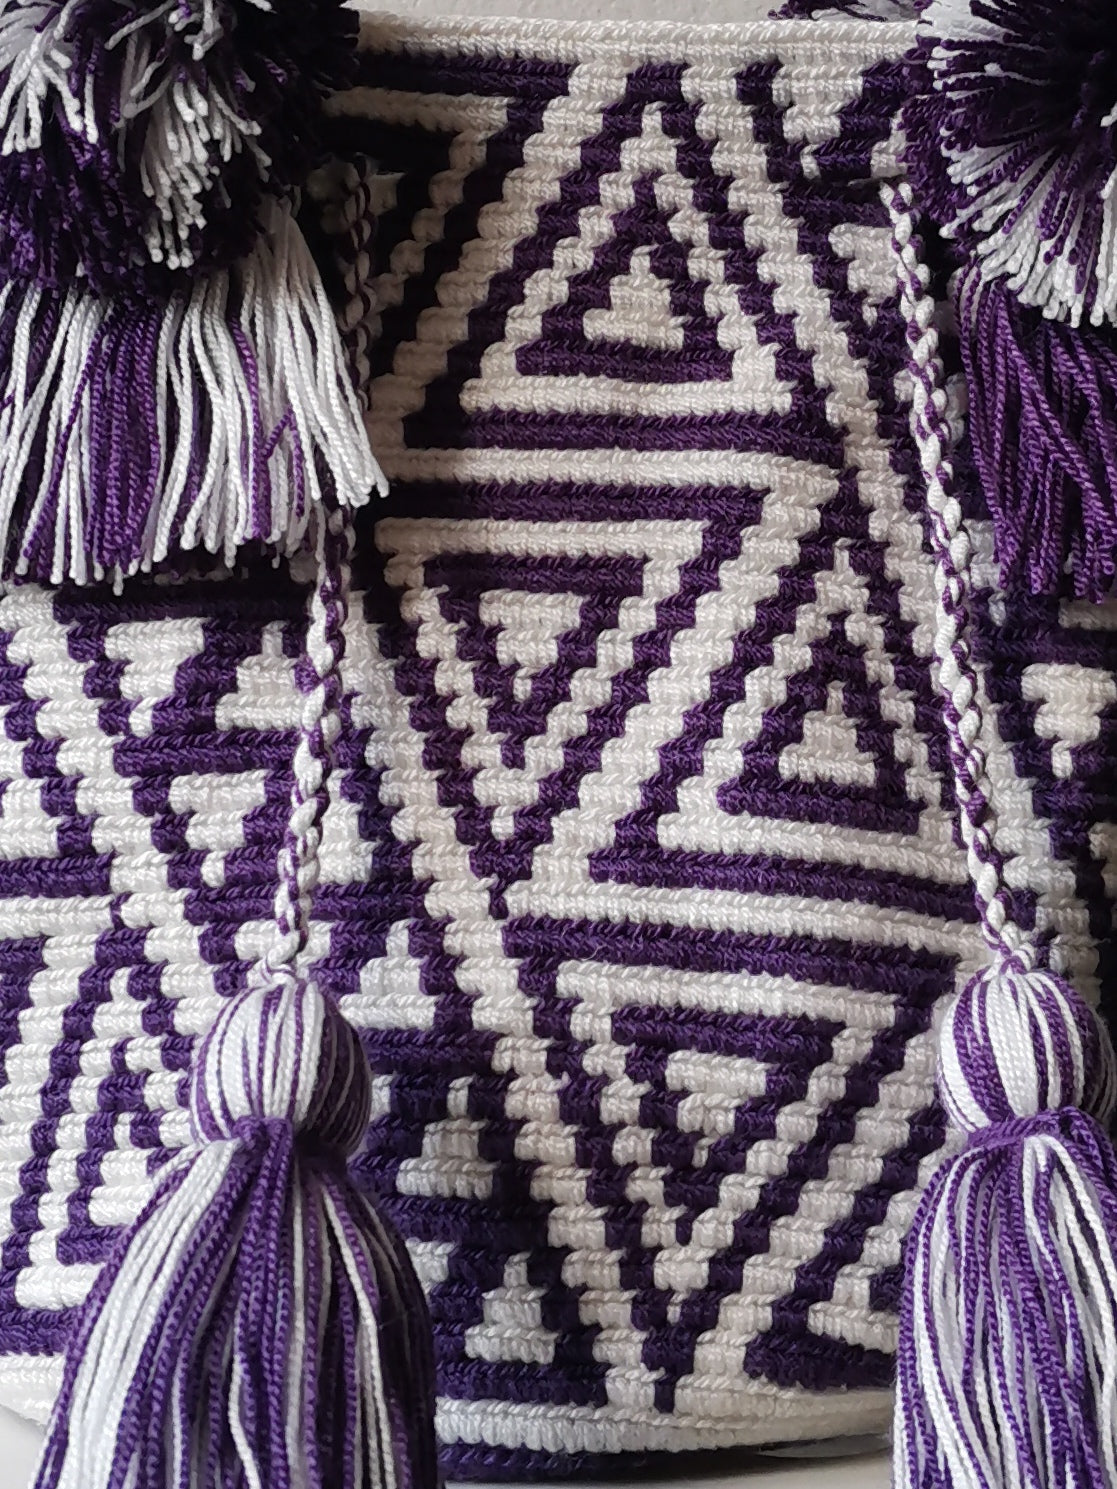 White and purple M mochila handbag